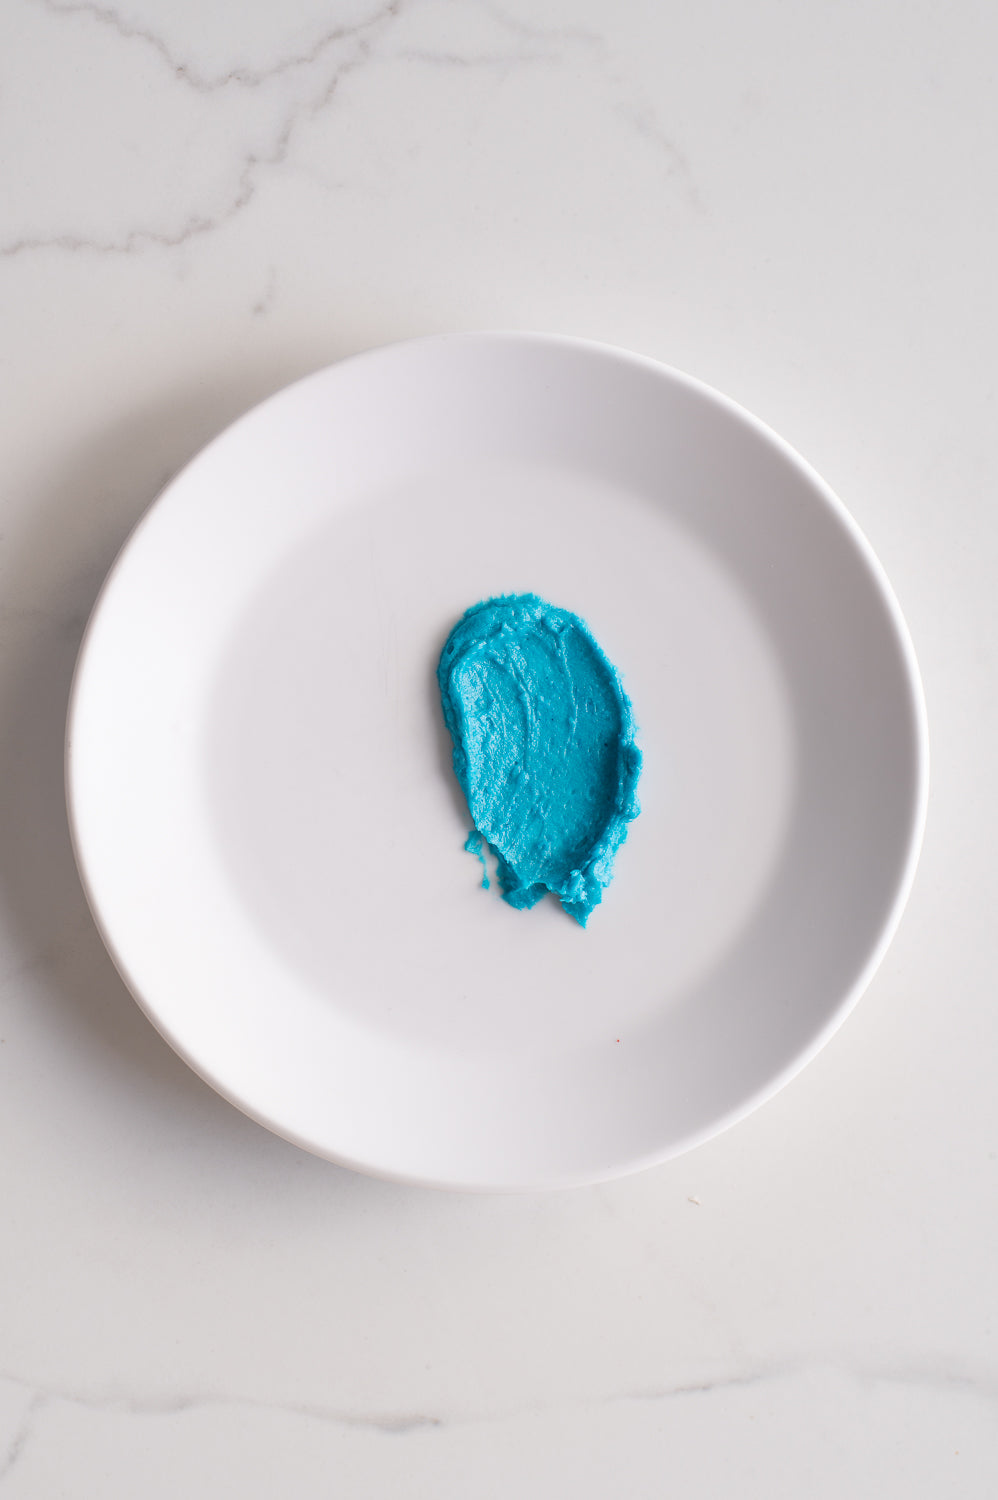 An organic shape of blue buttercream icing on a plate